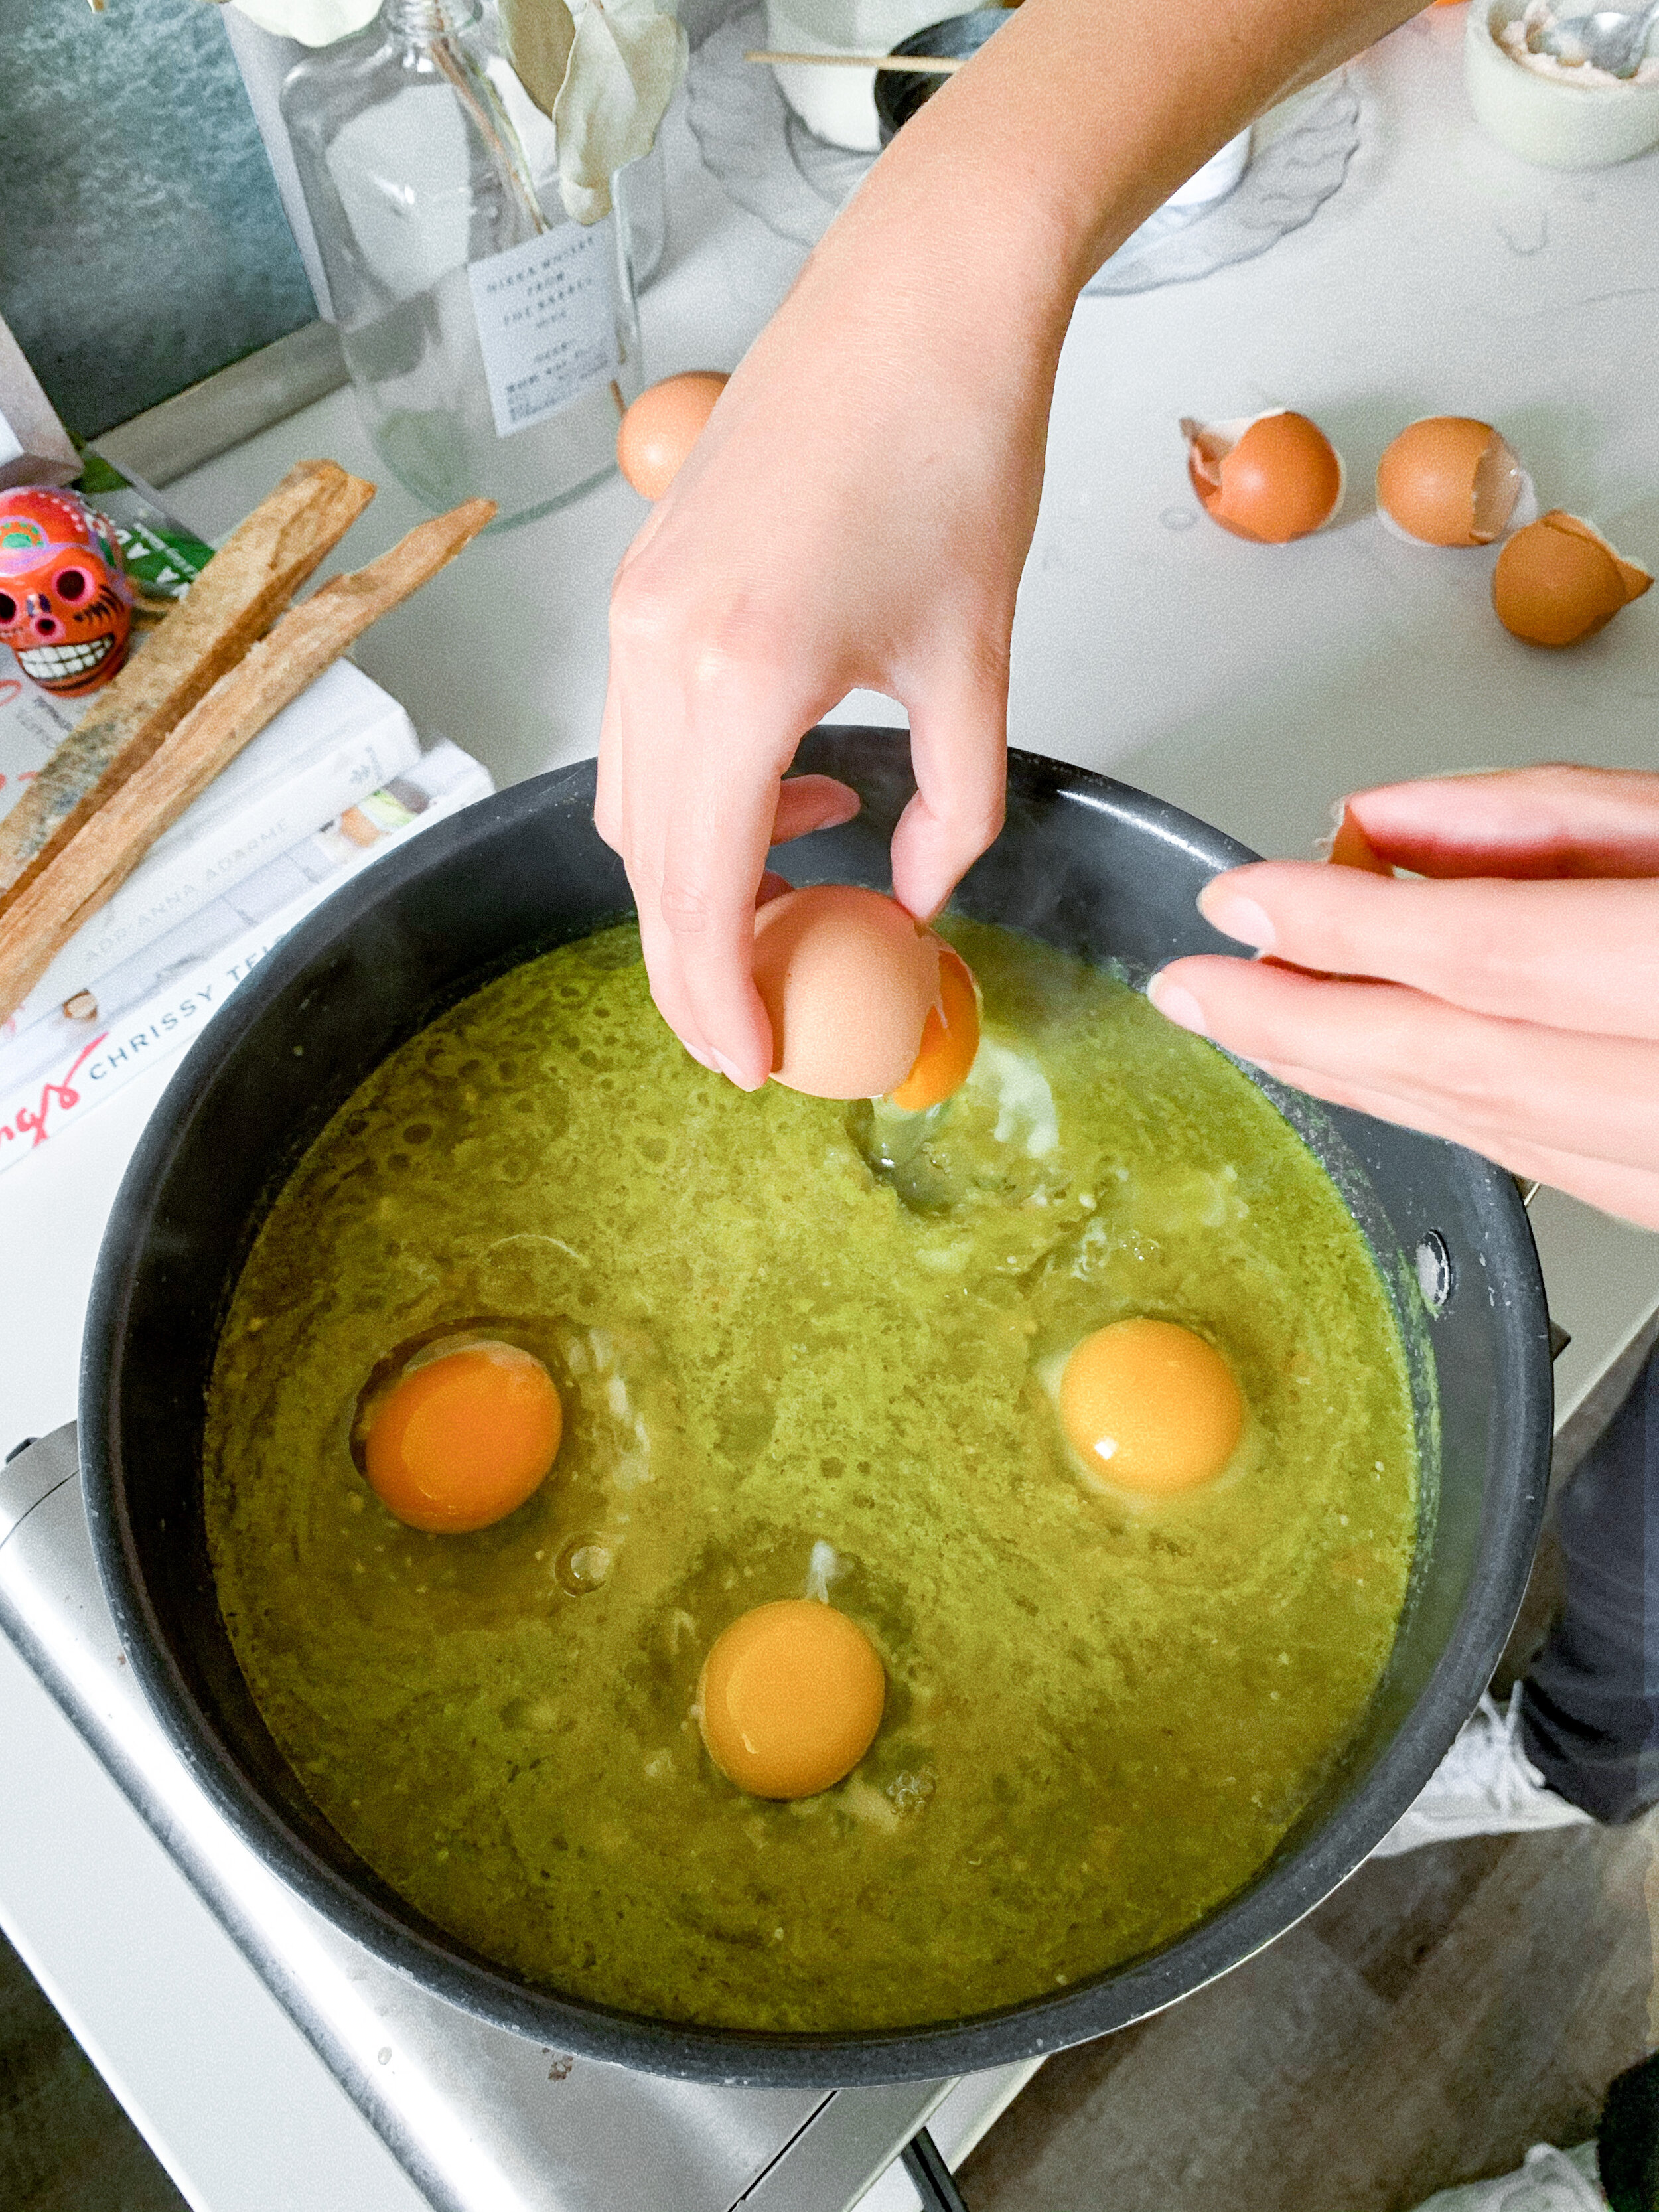 Cracking each egg into the salsa verde